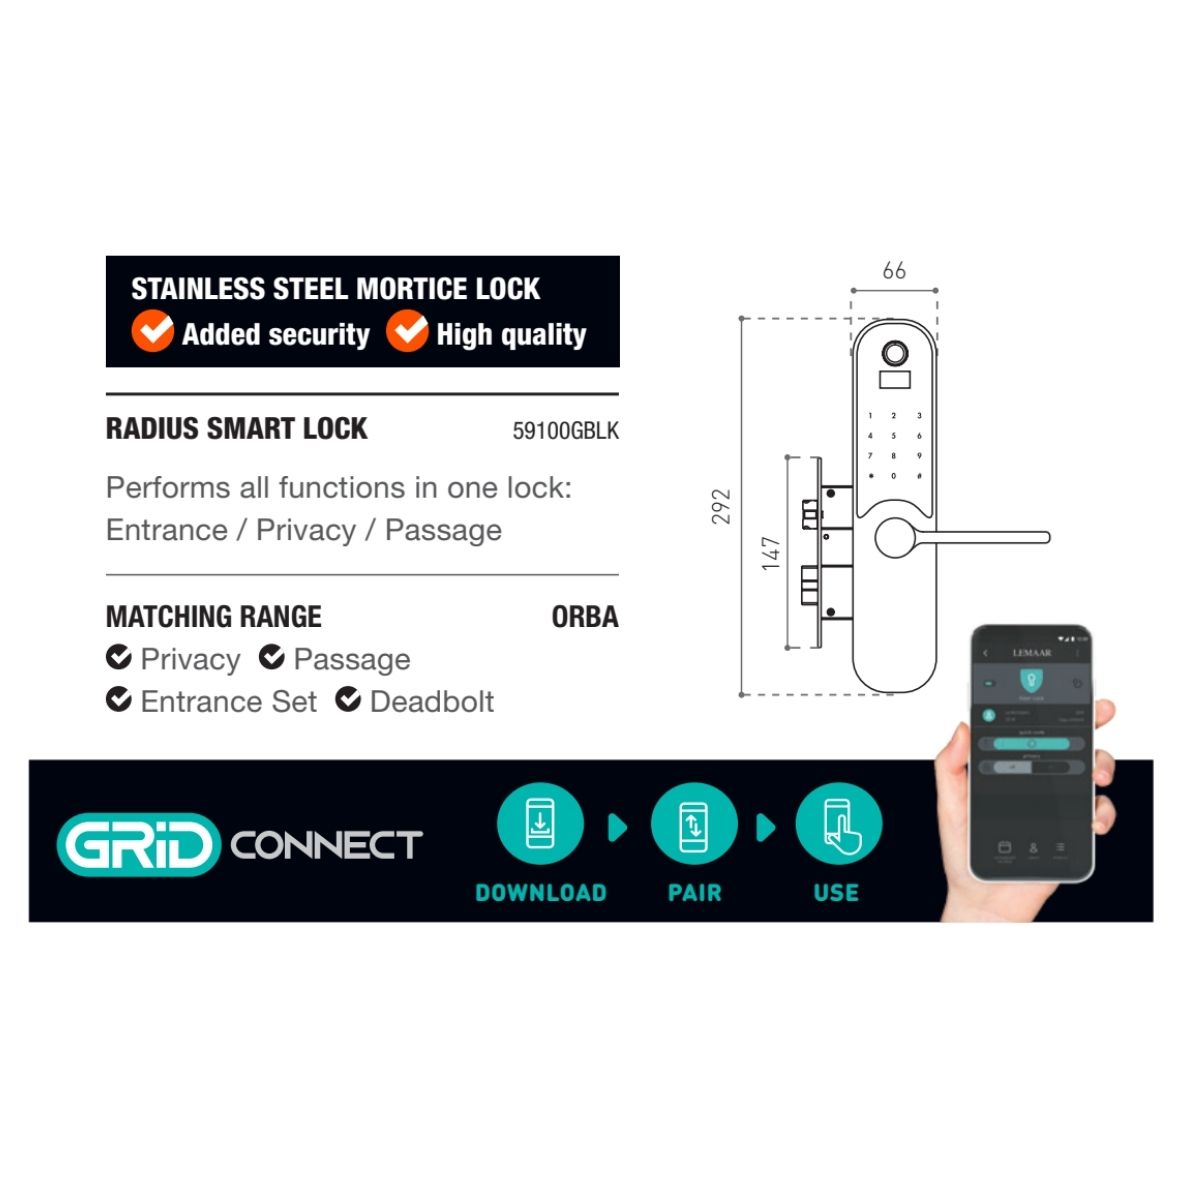 smart lock radius features grid connect v2